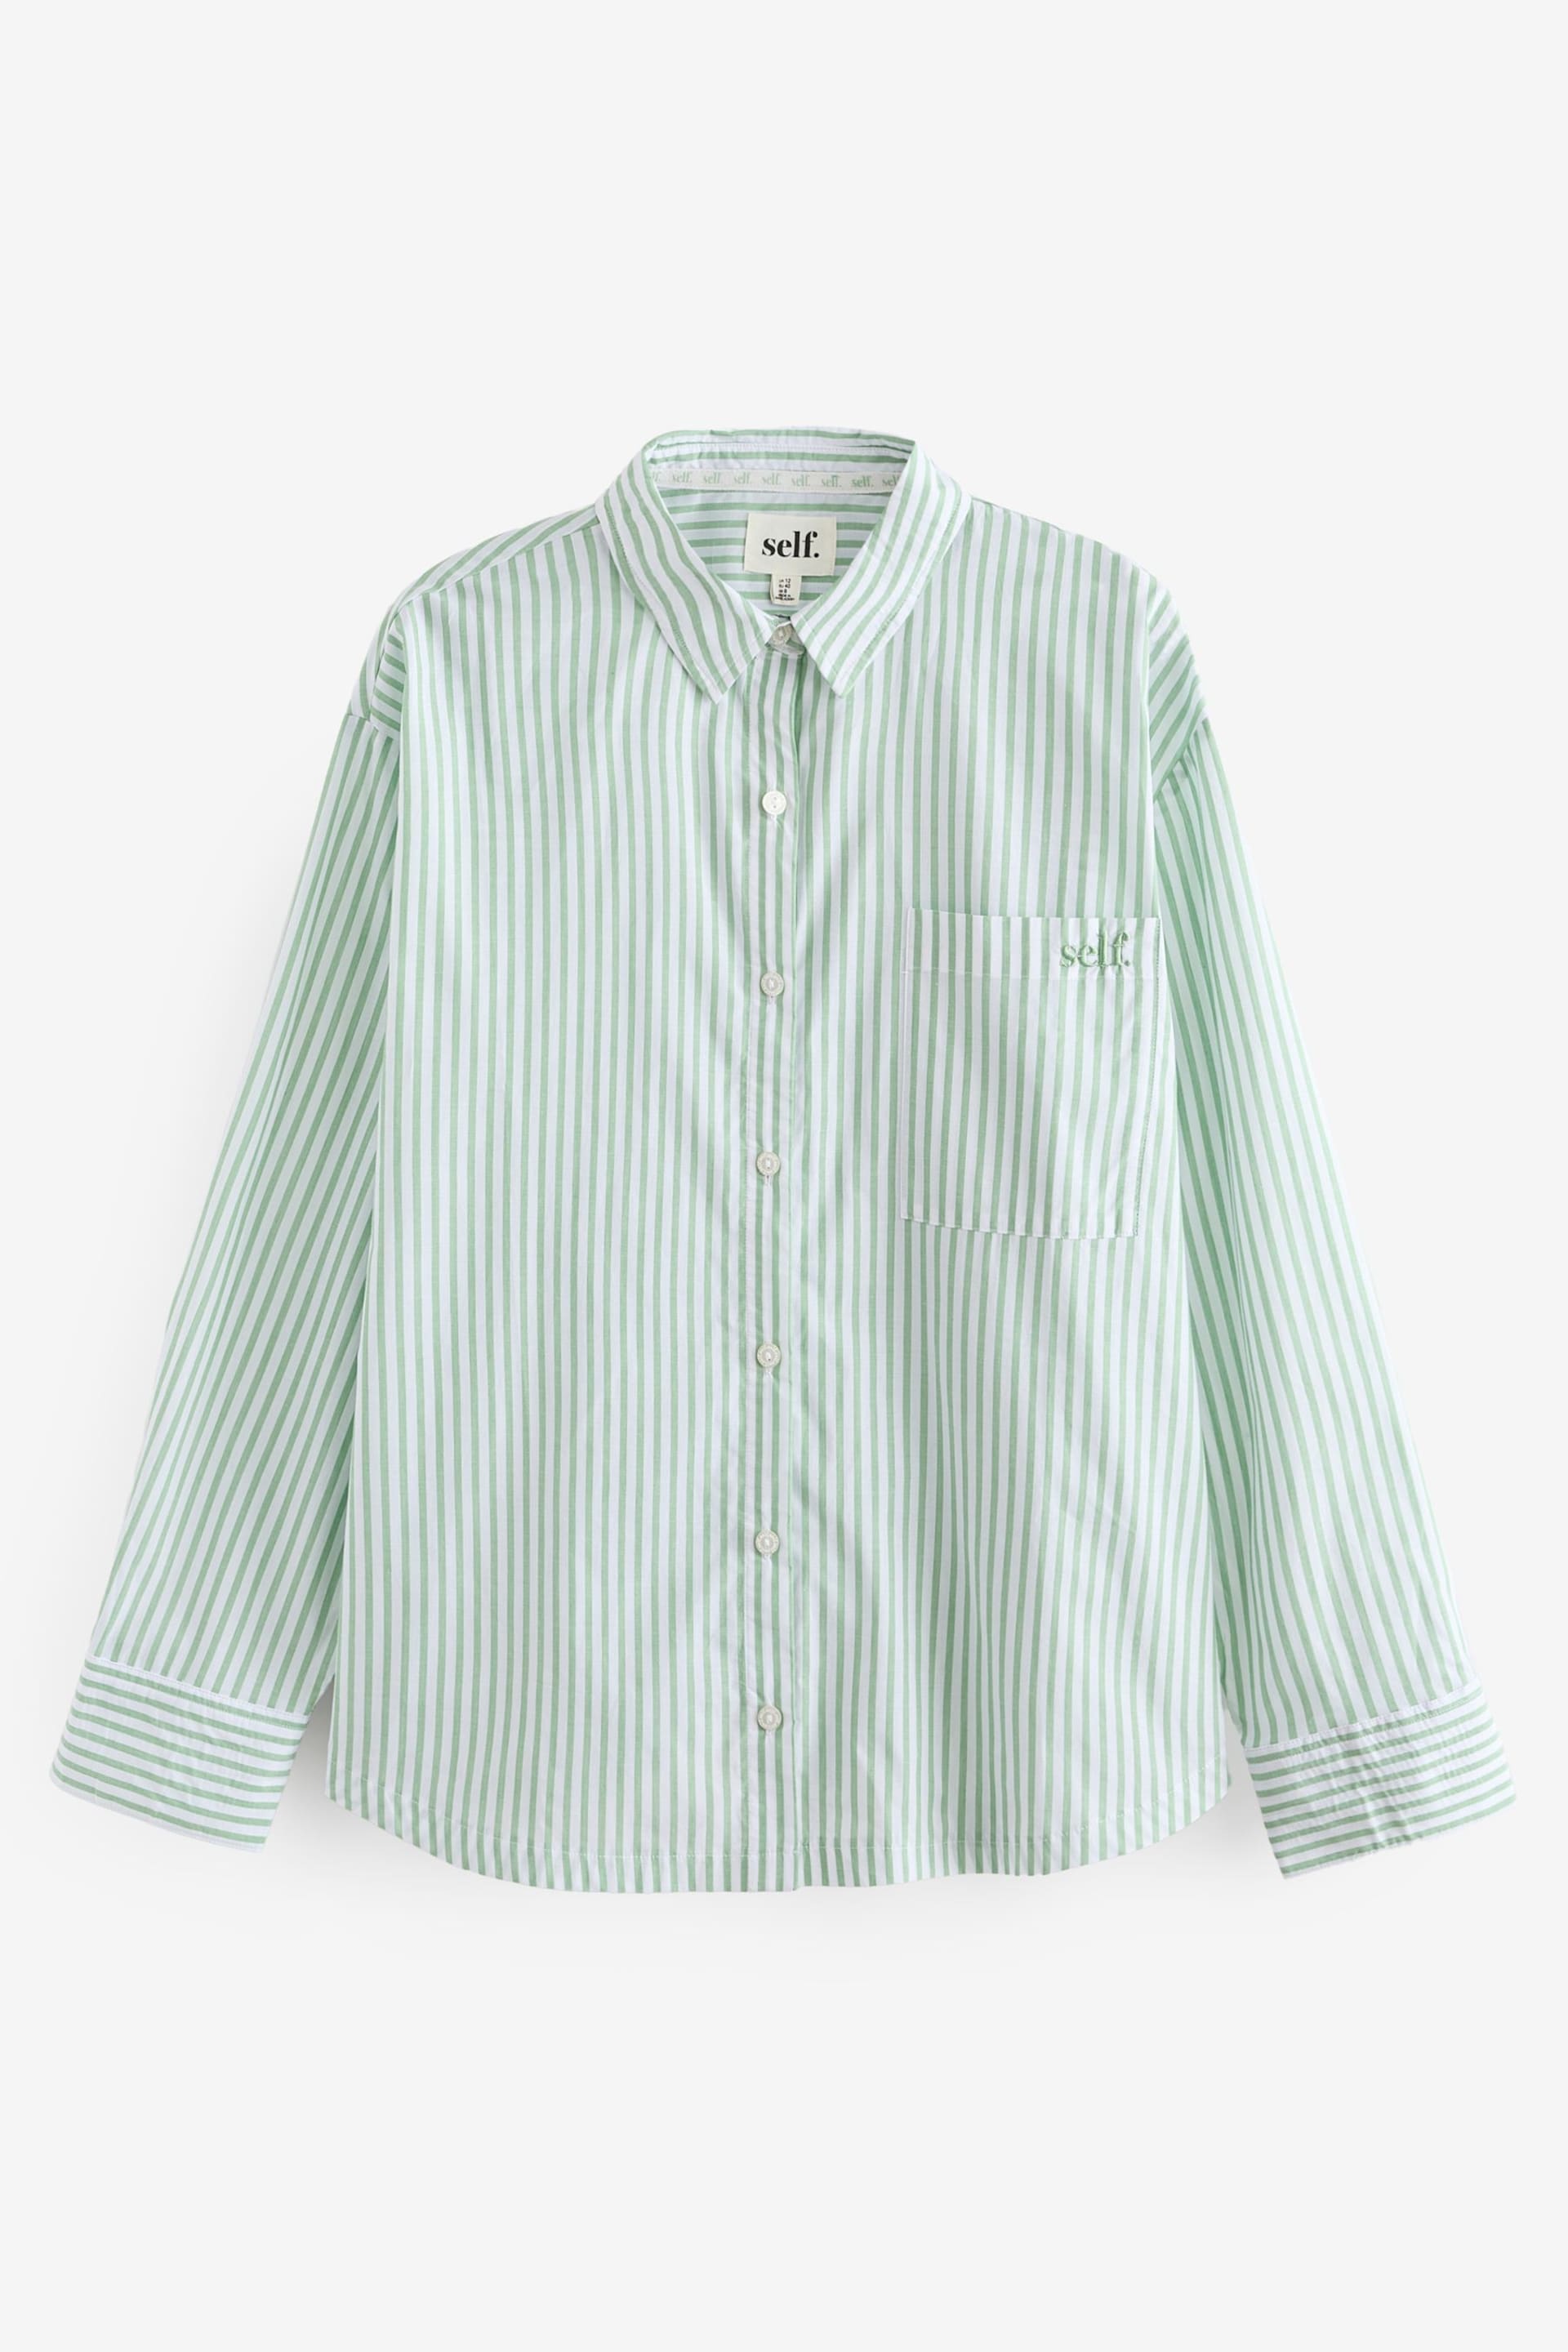 self. Green Oversized Cotton Shirt - Image 7 of 8